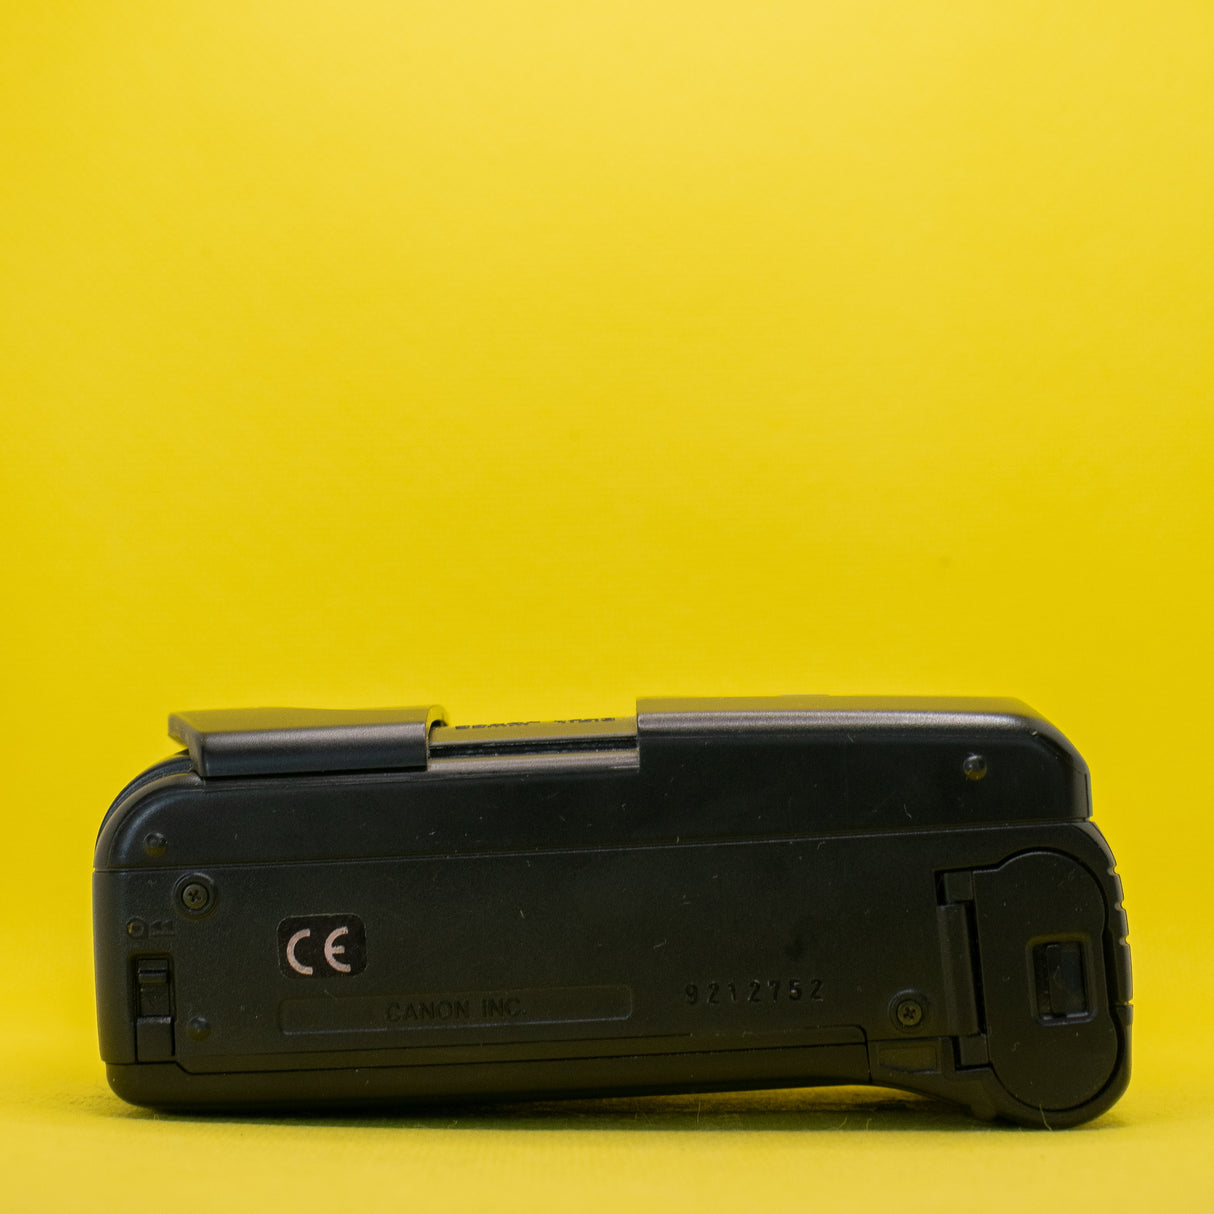 Canon Prima Junior DX - 35mm Compact Film Camera